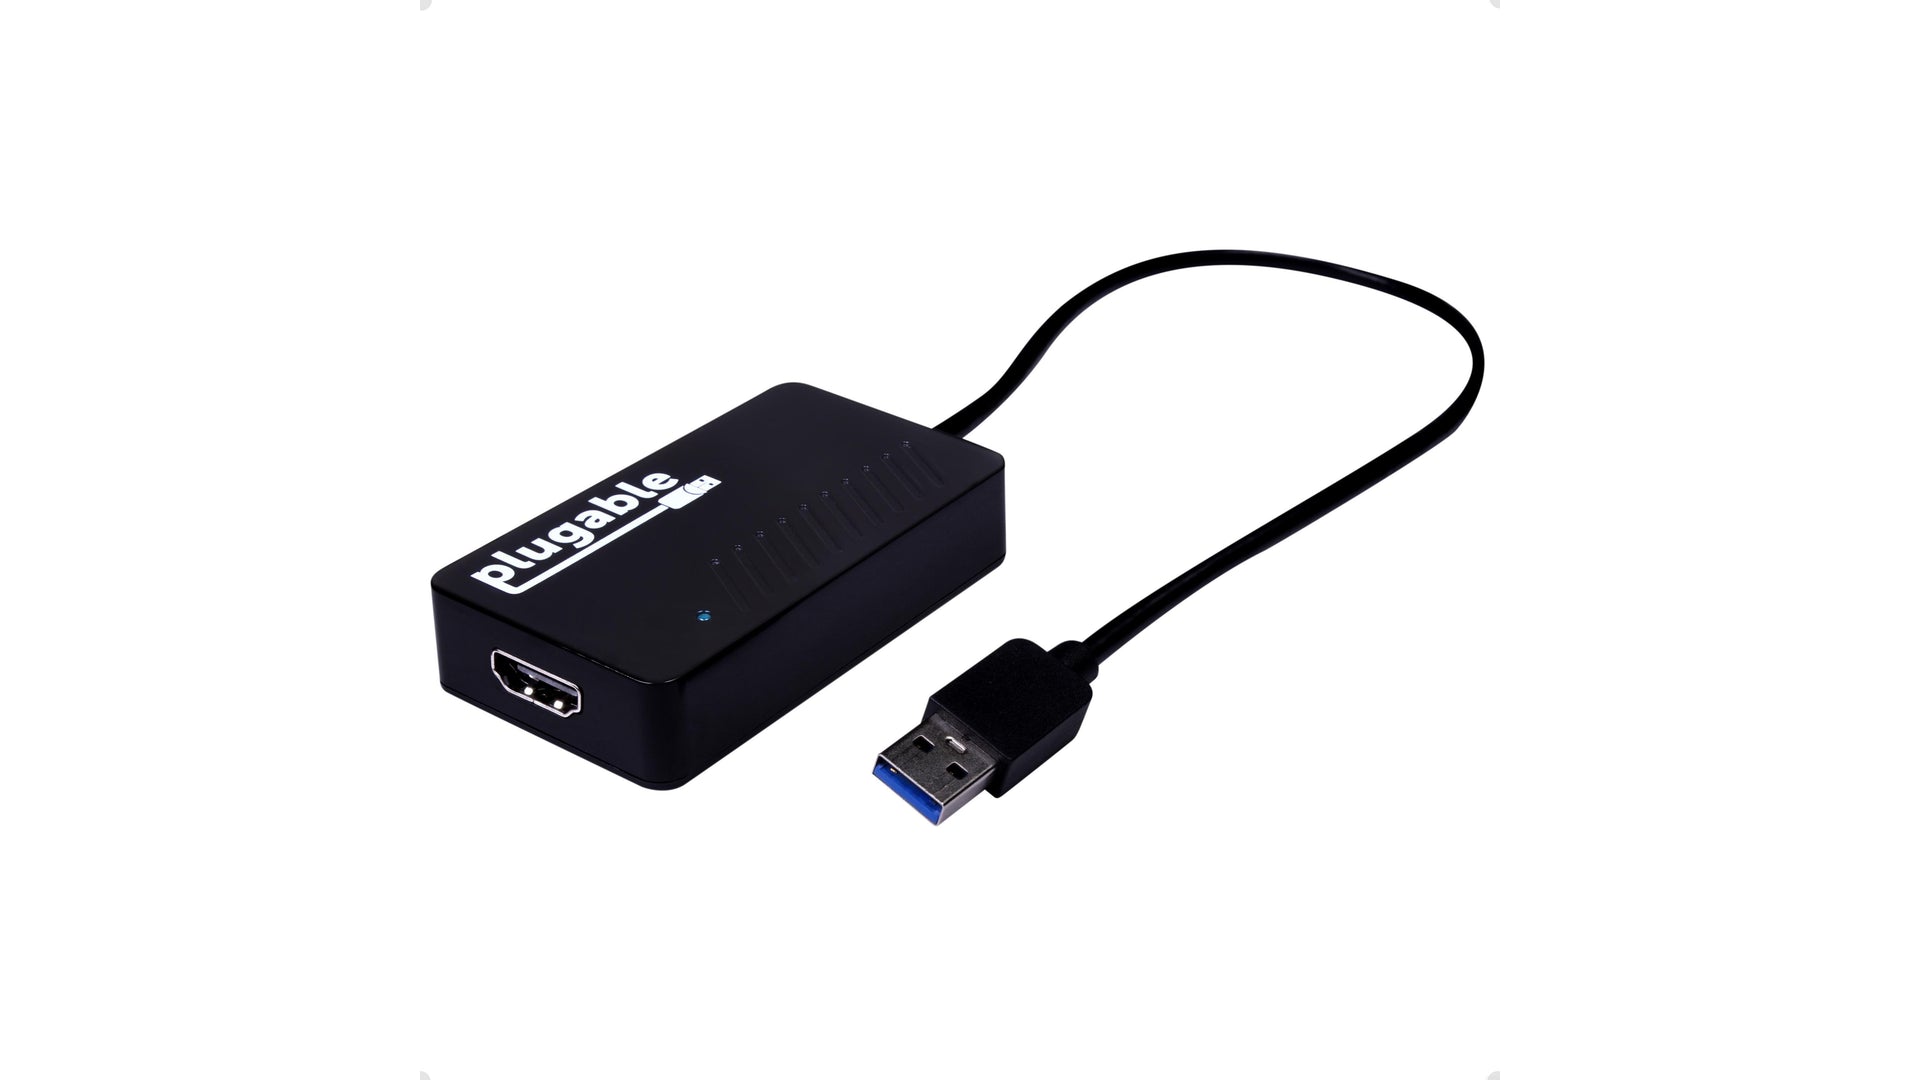 Plugable USB 3.0 Sharing Switch – Plugable Technologies